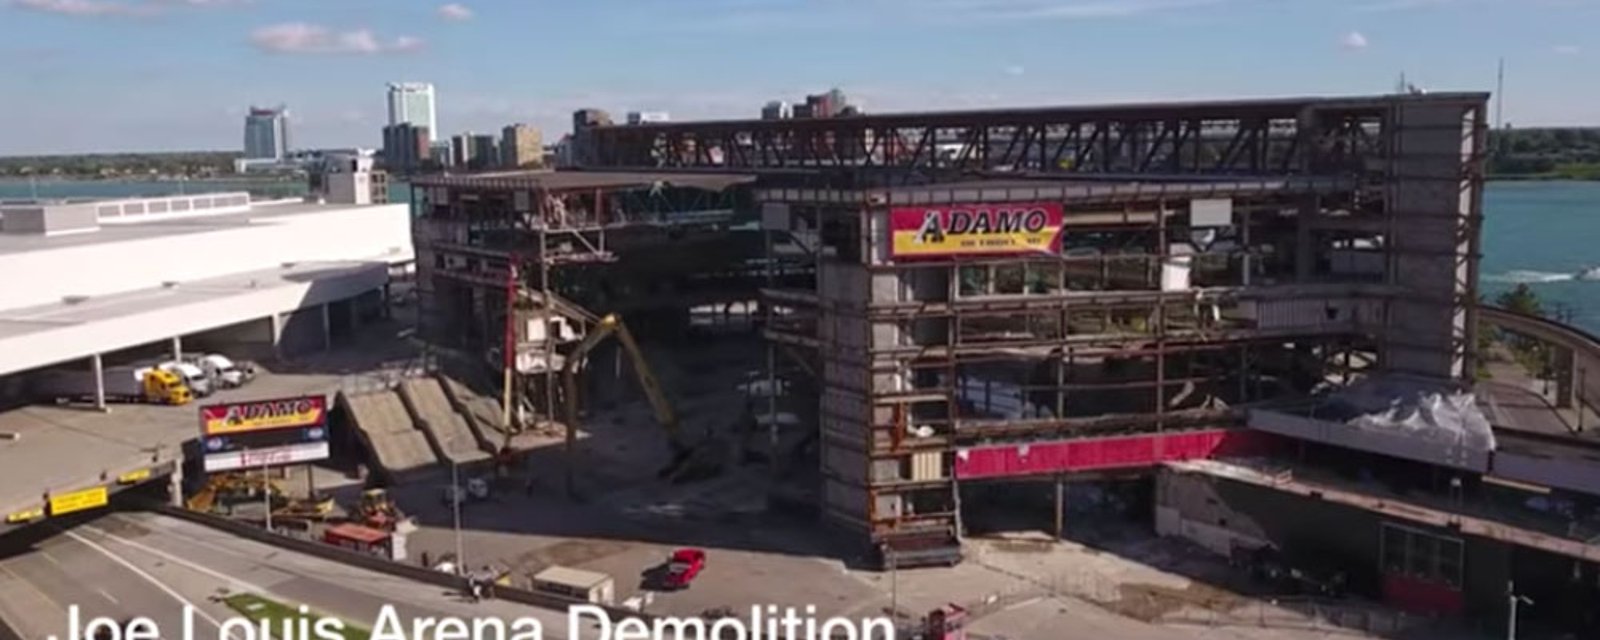 Incredible, but heartbreaking drone footage of Joe Louis Arena demolition 